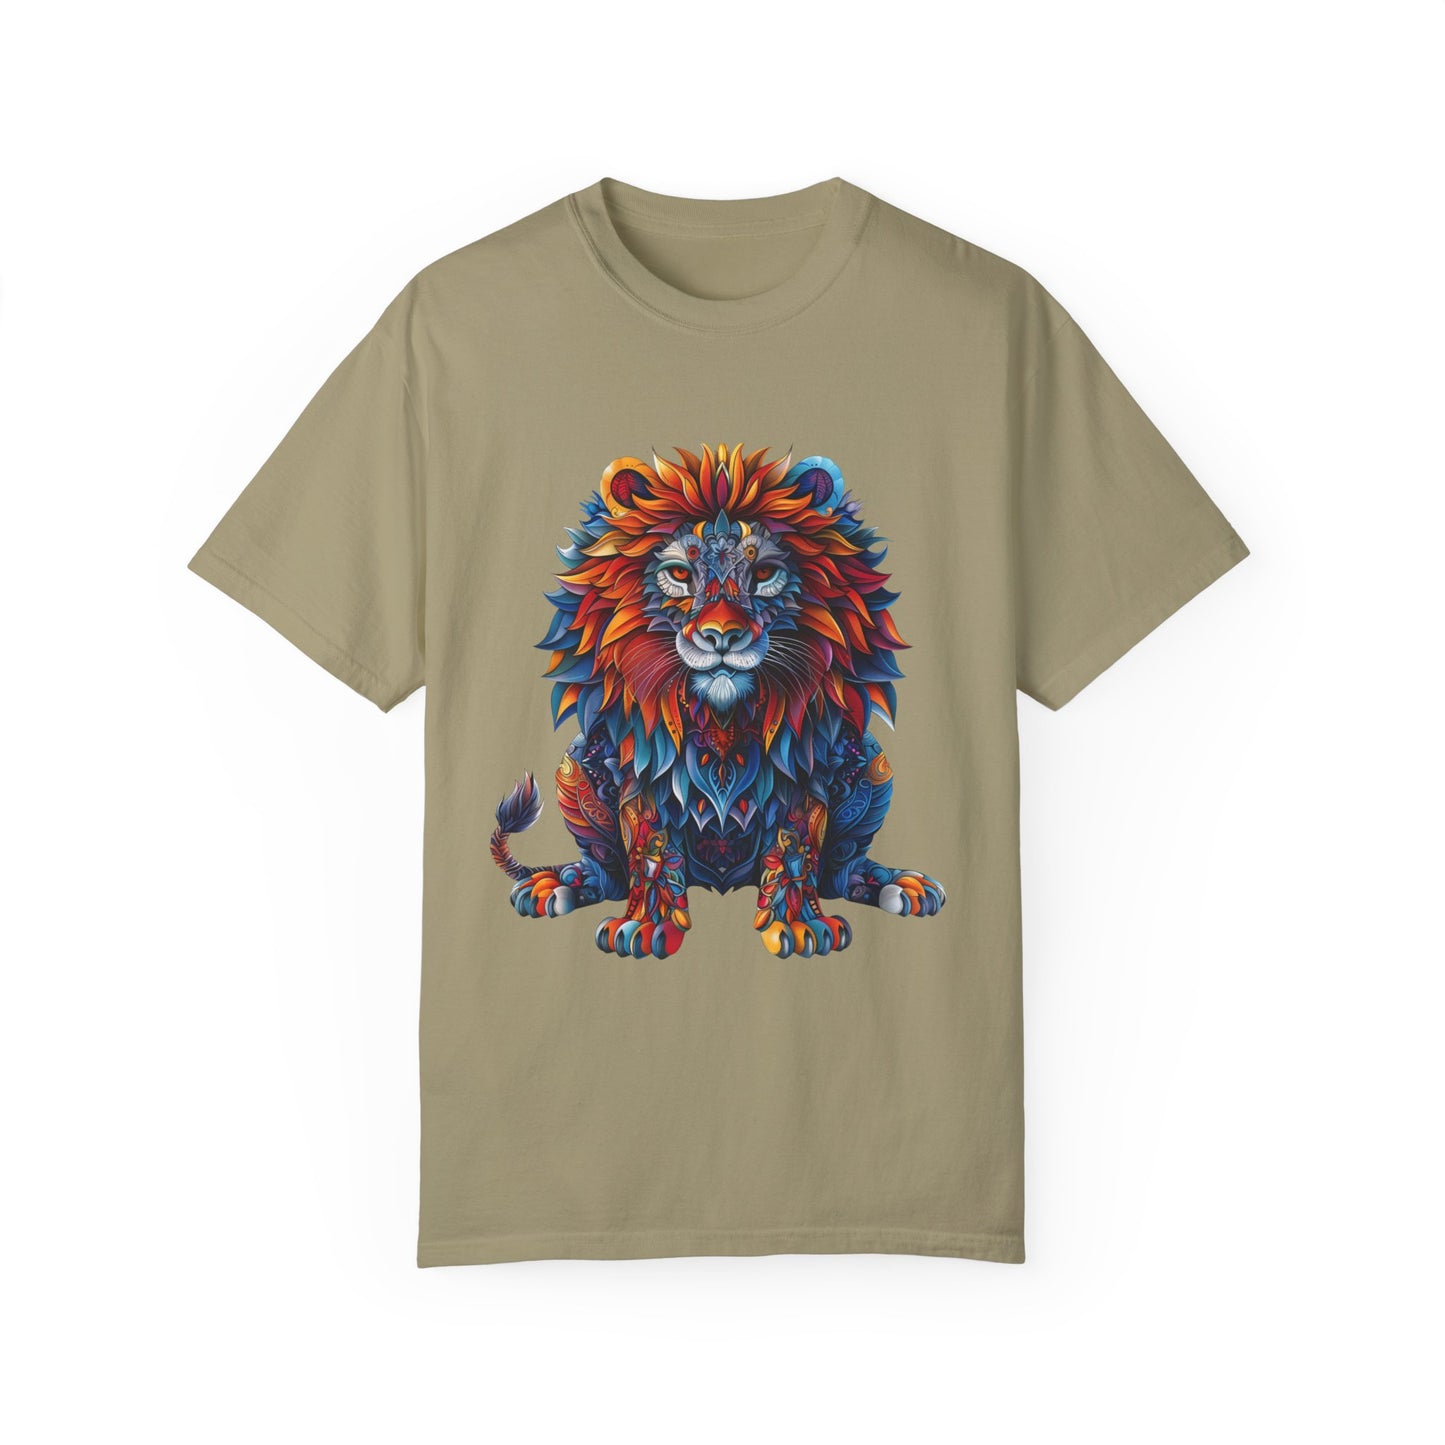 Lion Head Cool Graphic Design Novelty Unisex Garment-dyed T-shirt Cotton Funny Humorous Graphic Soft Premium Unisex Men Women Khaki T-shirt Birthday Gift-11